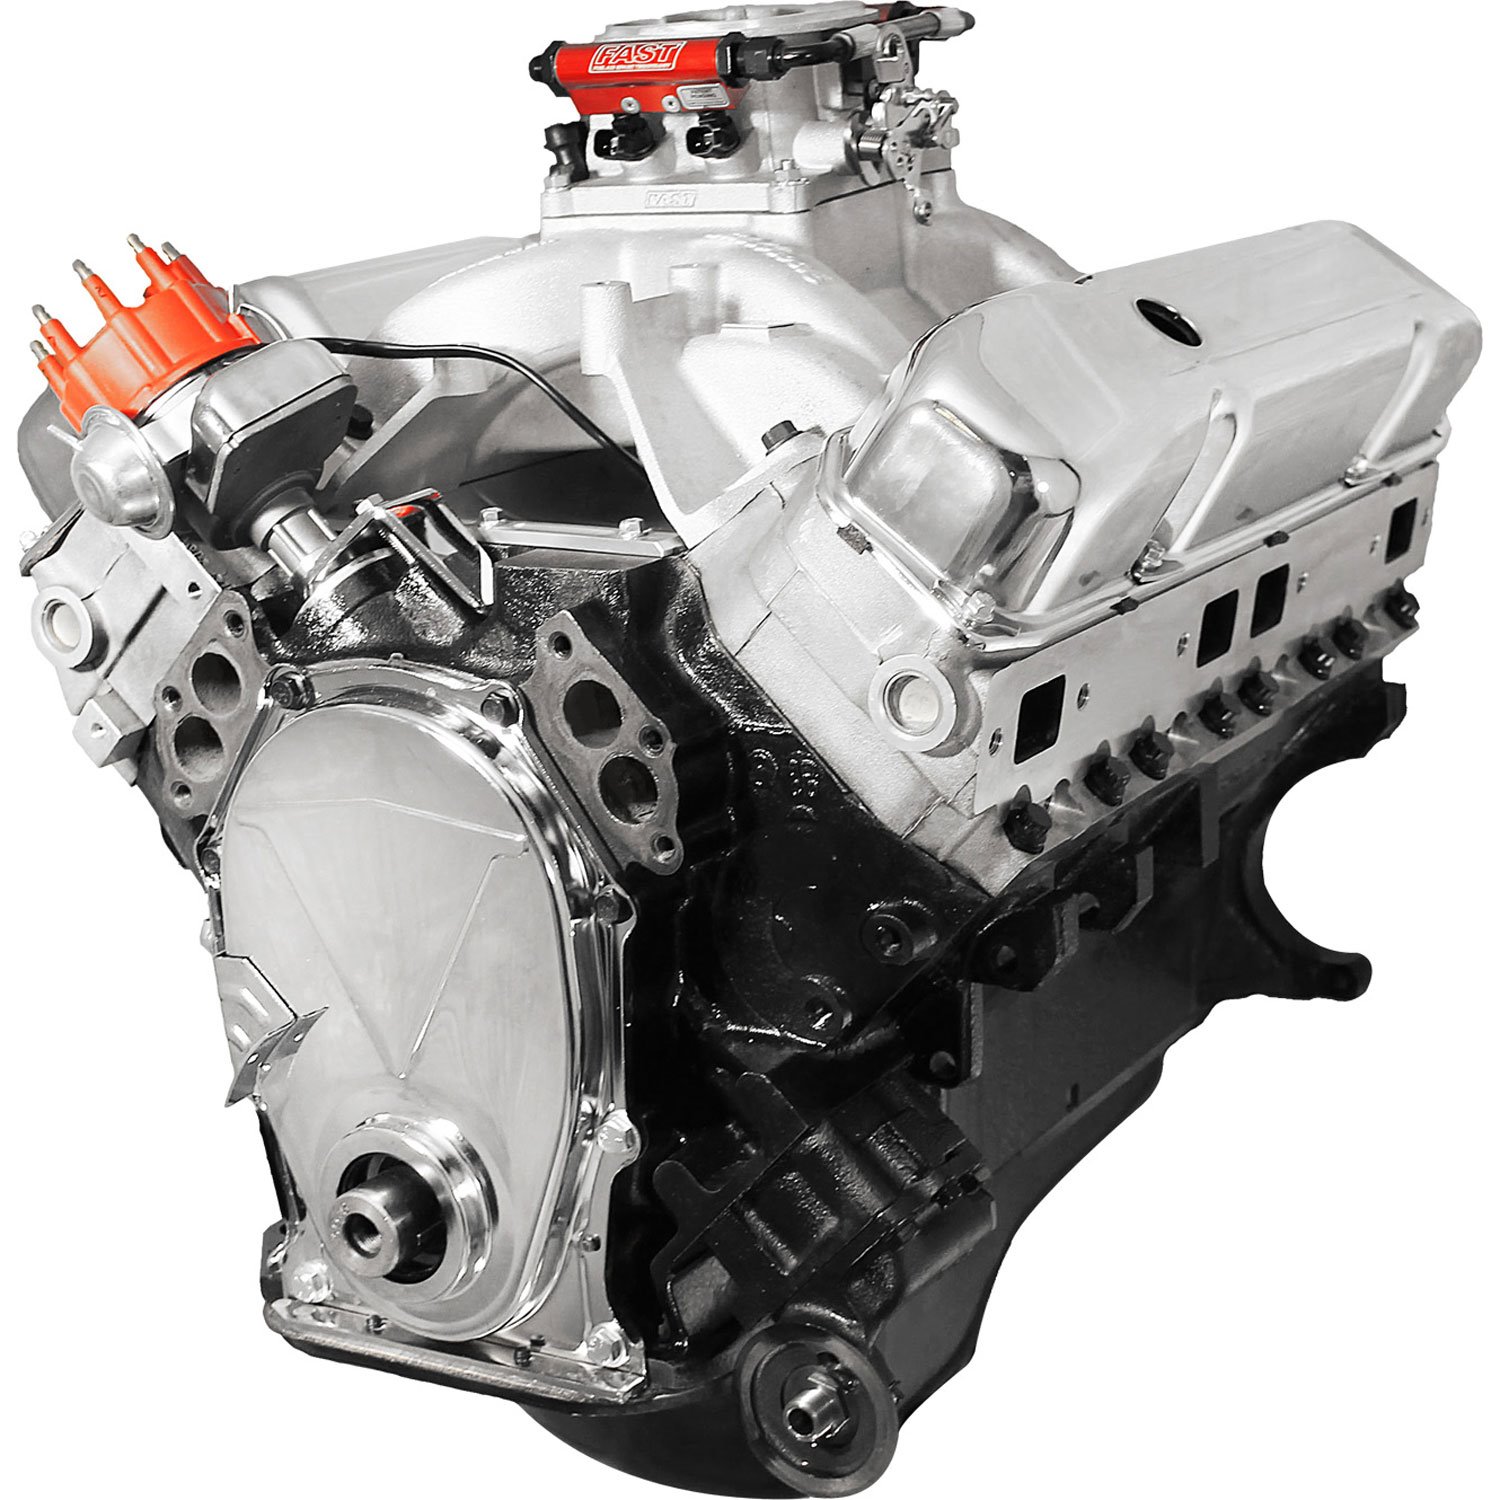 Big Block Chrysler 493ci Stroker Dress Engine 525HP, EZ EFI System